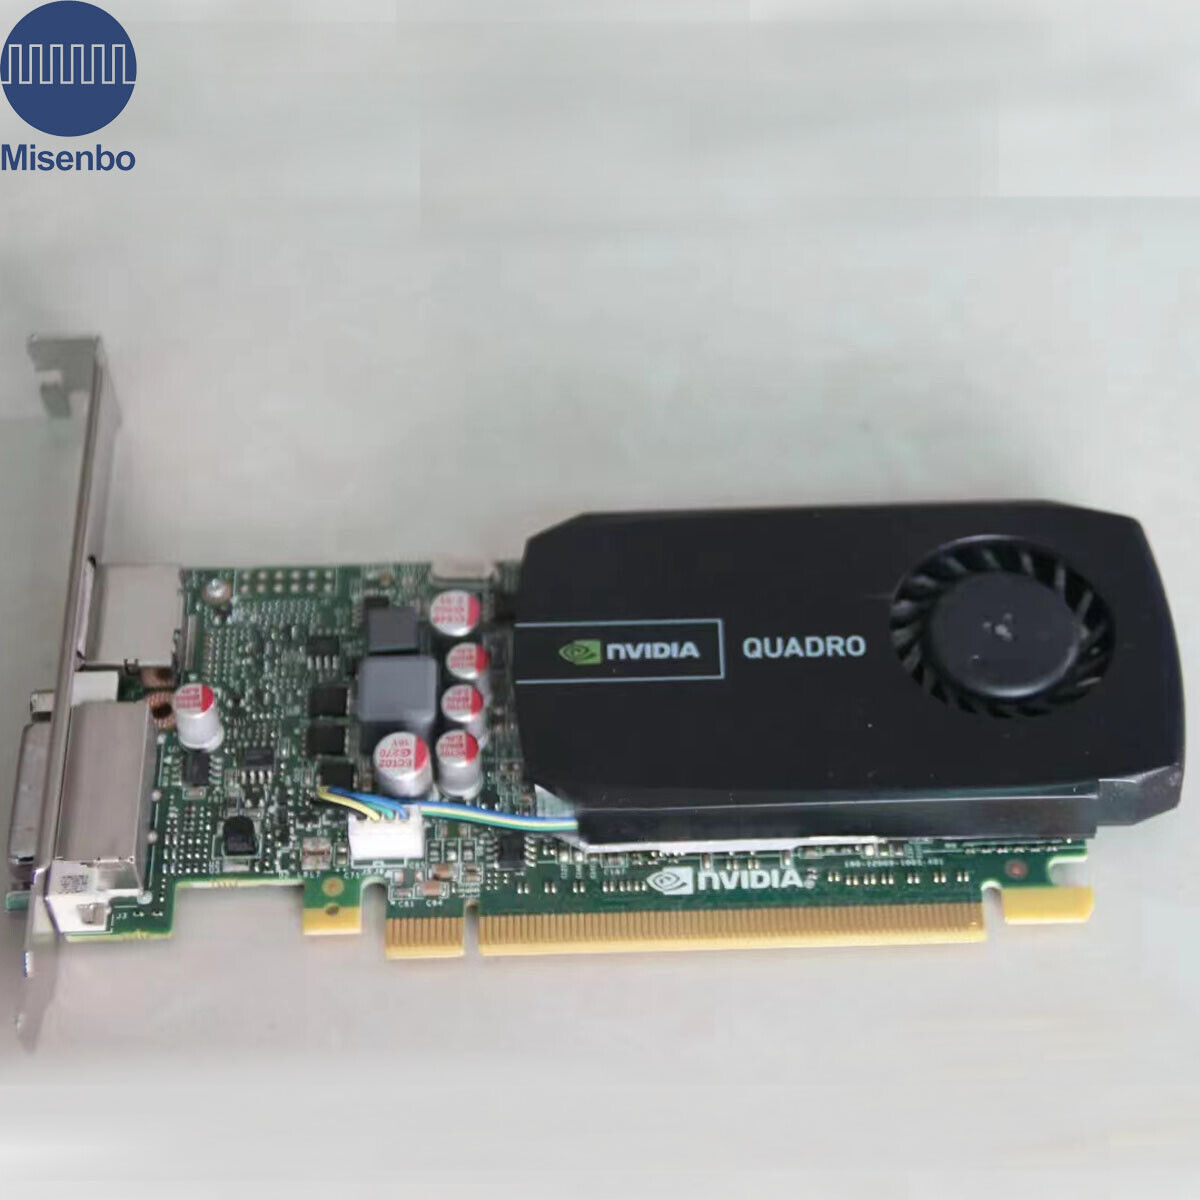 NVIDIA Quadro Q600 1GB 128bit Professional graphics card